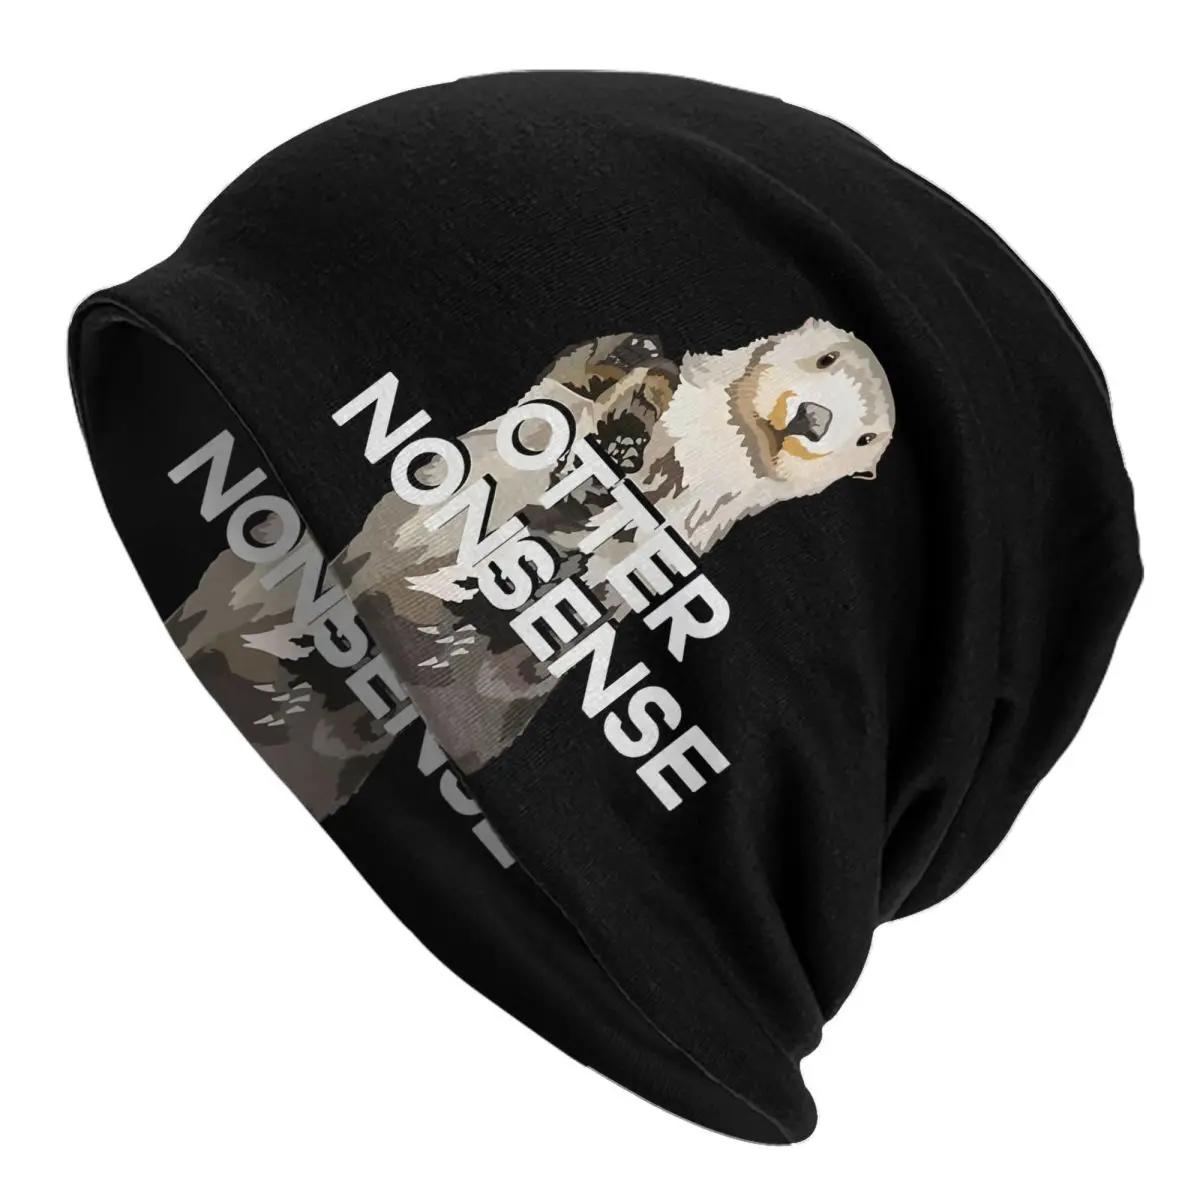 

Nonsense Bonnet Homme Fashion Thin Hat Otter Pet Lover Skullies Beanies Caps For Men Women Novelty Cotton Hats